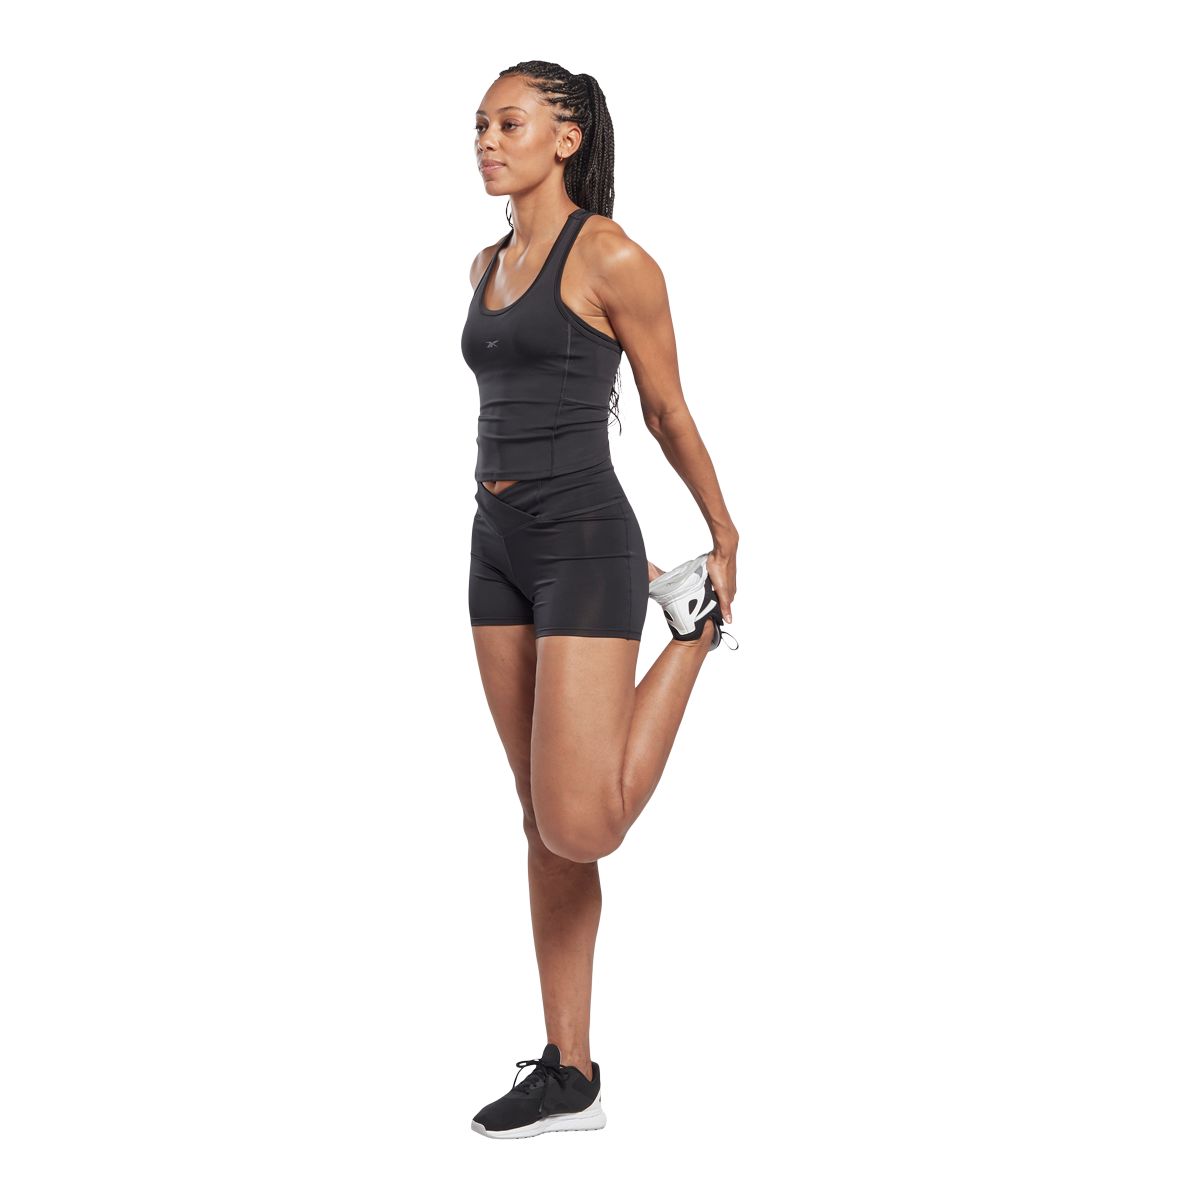 Reebok Women's Workout Basic Hot Shorts